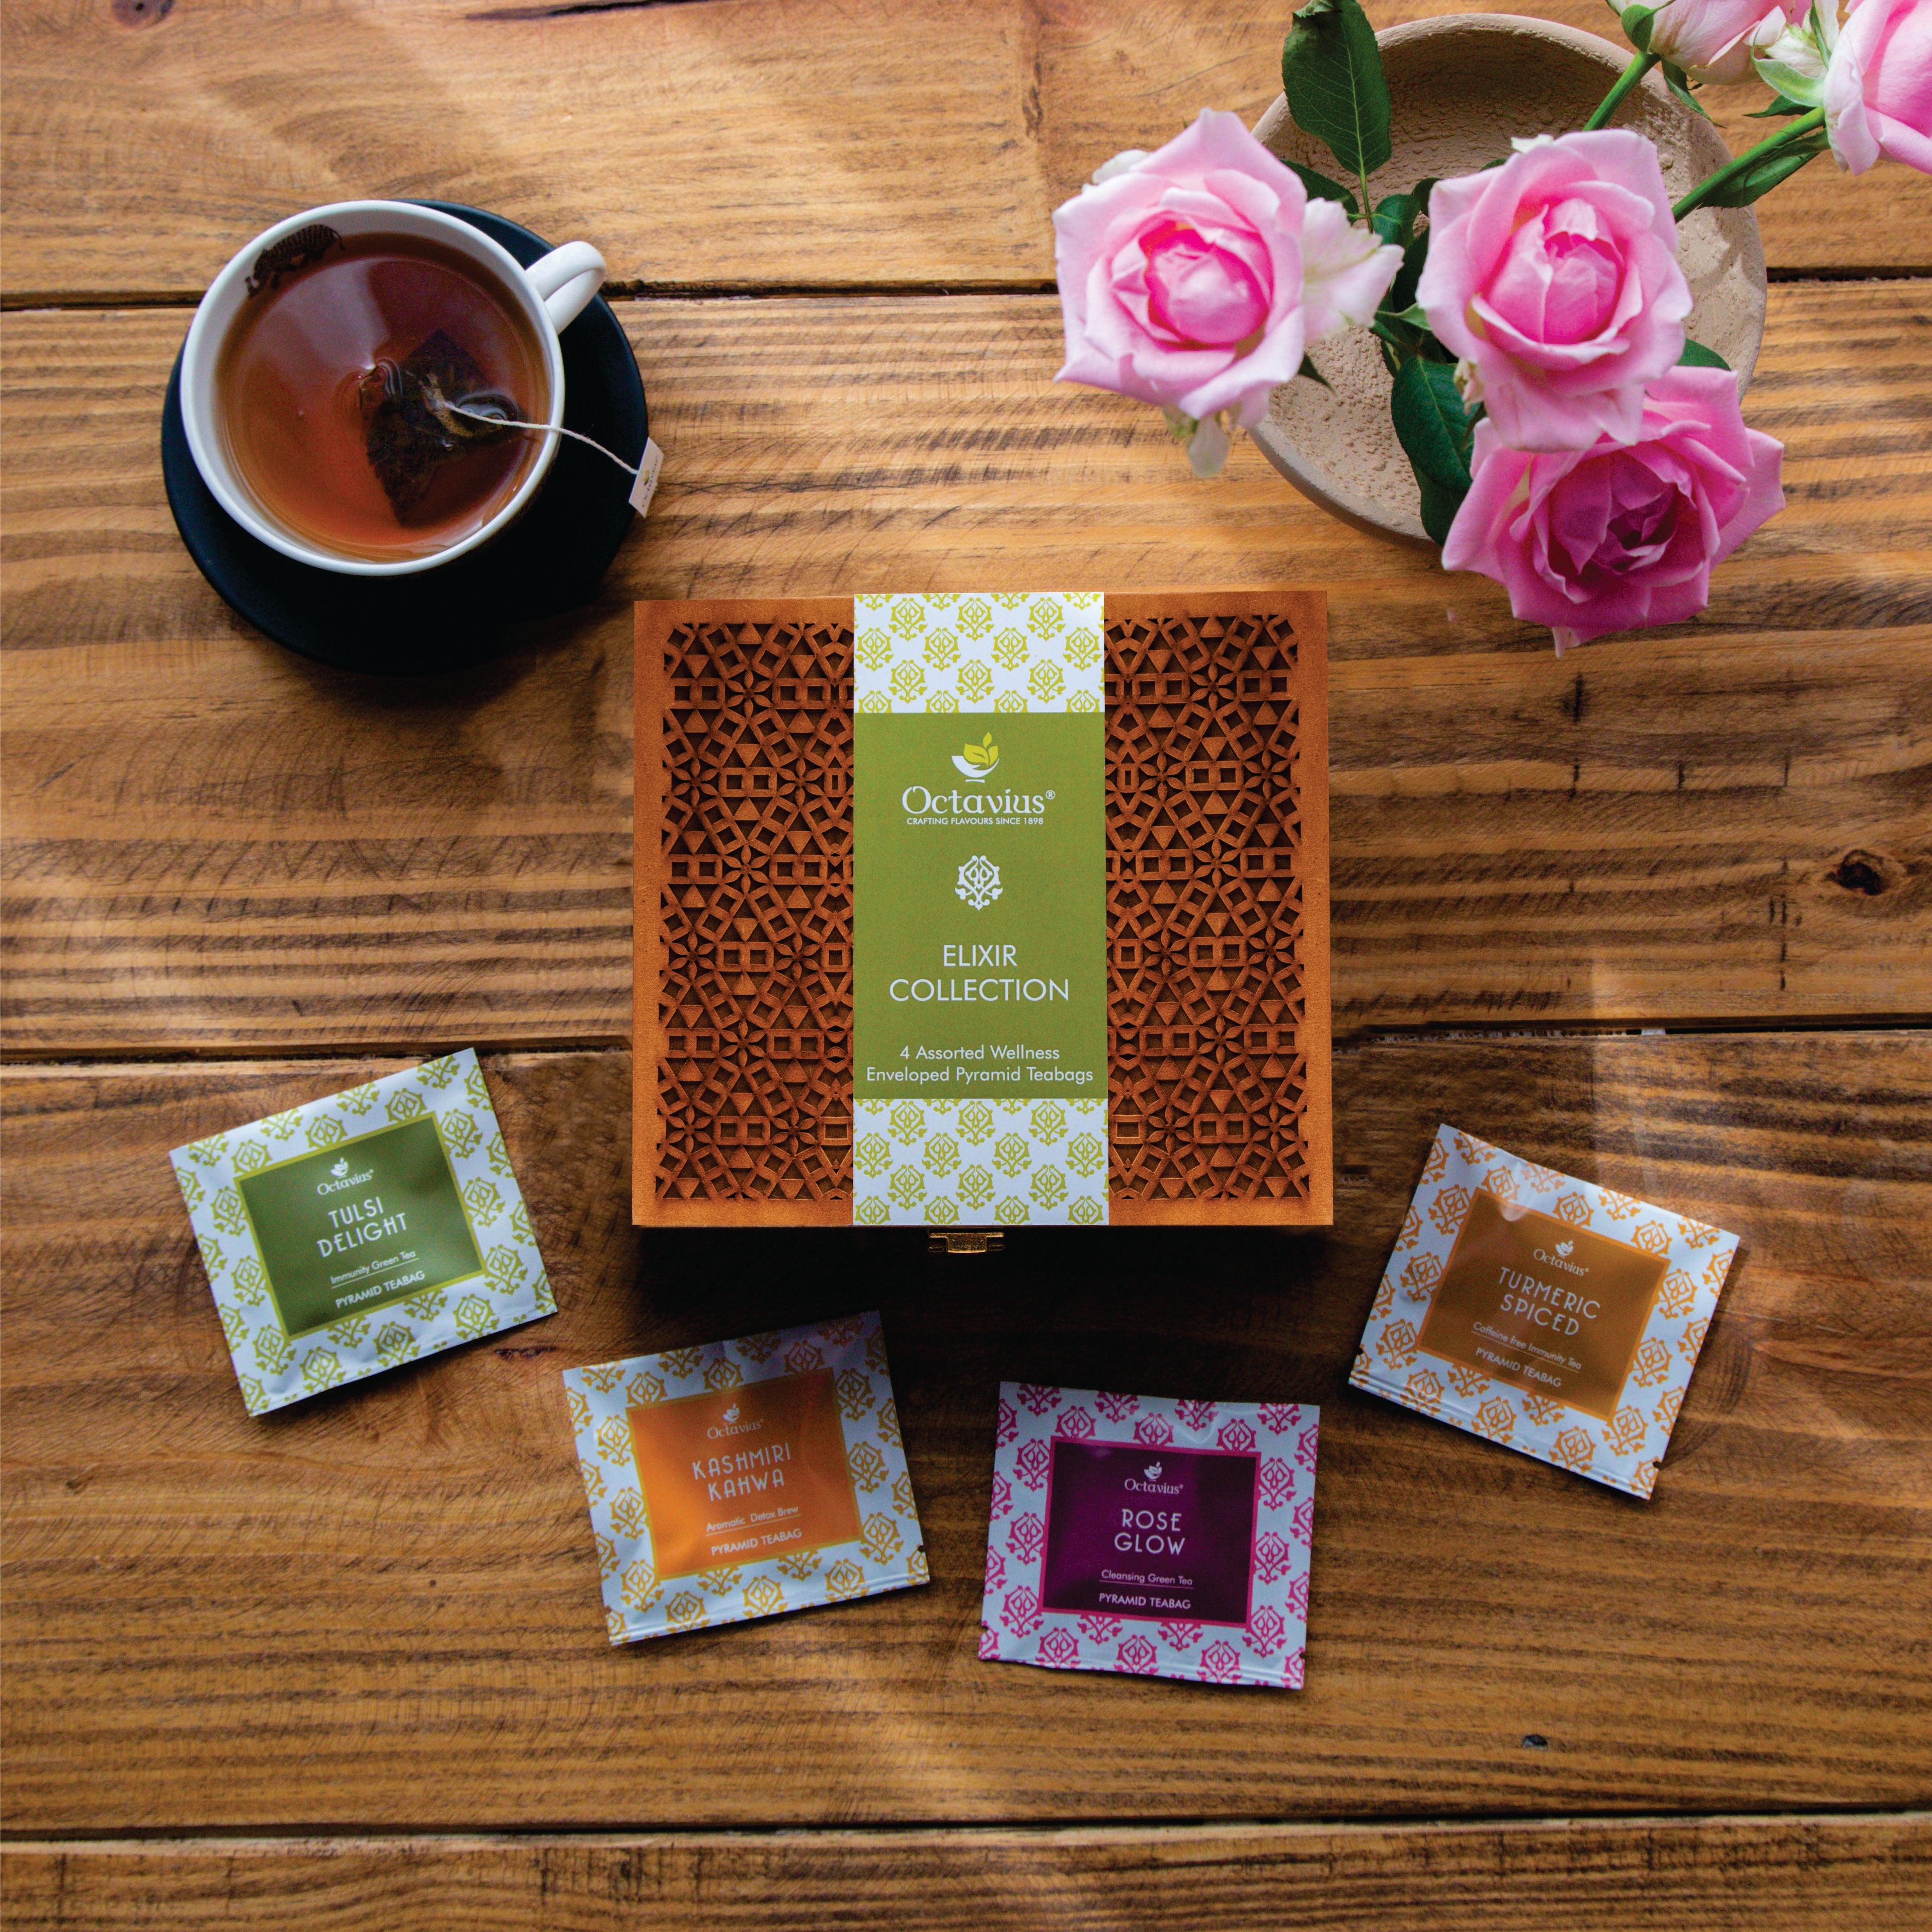 Elixir Collection 4 Assorted Wellness Teas - 40 Pyramid Teabags